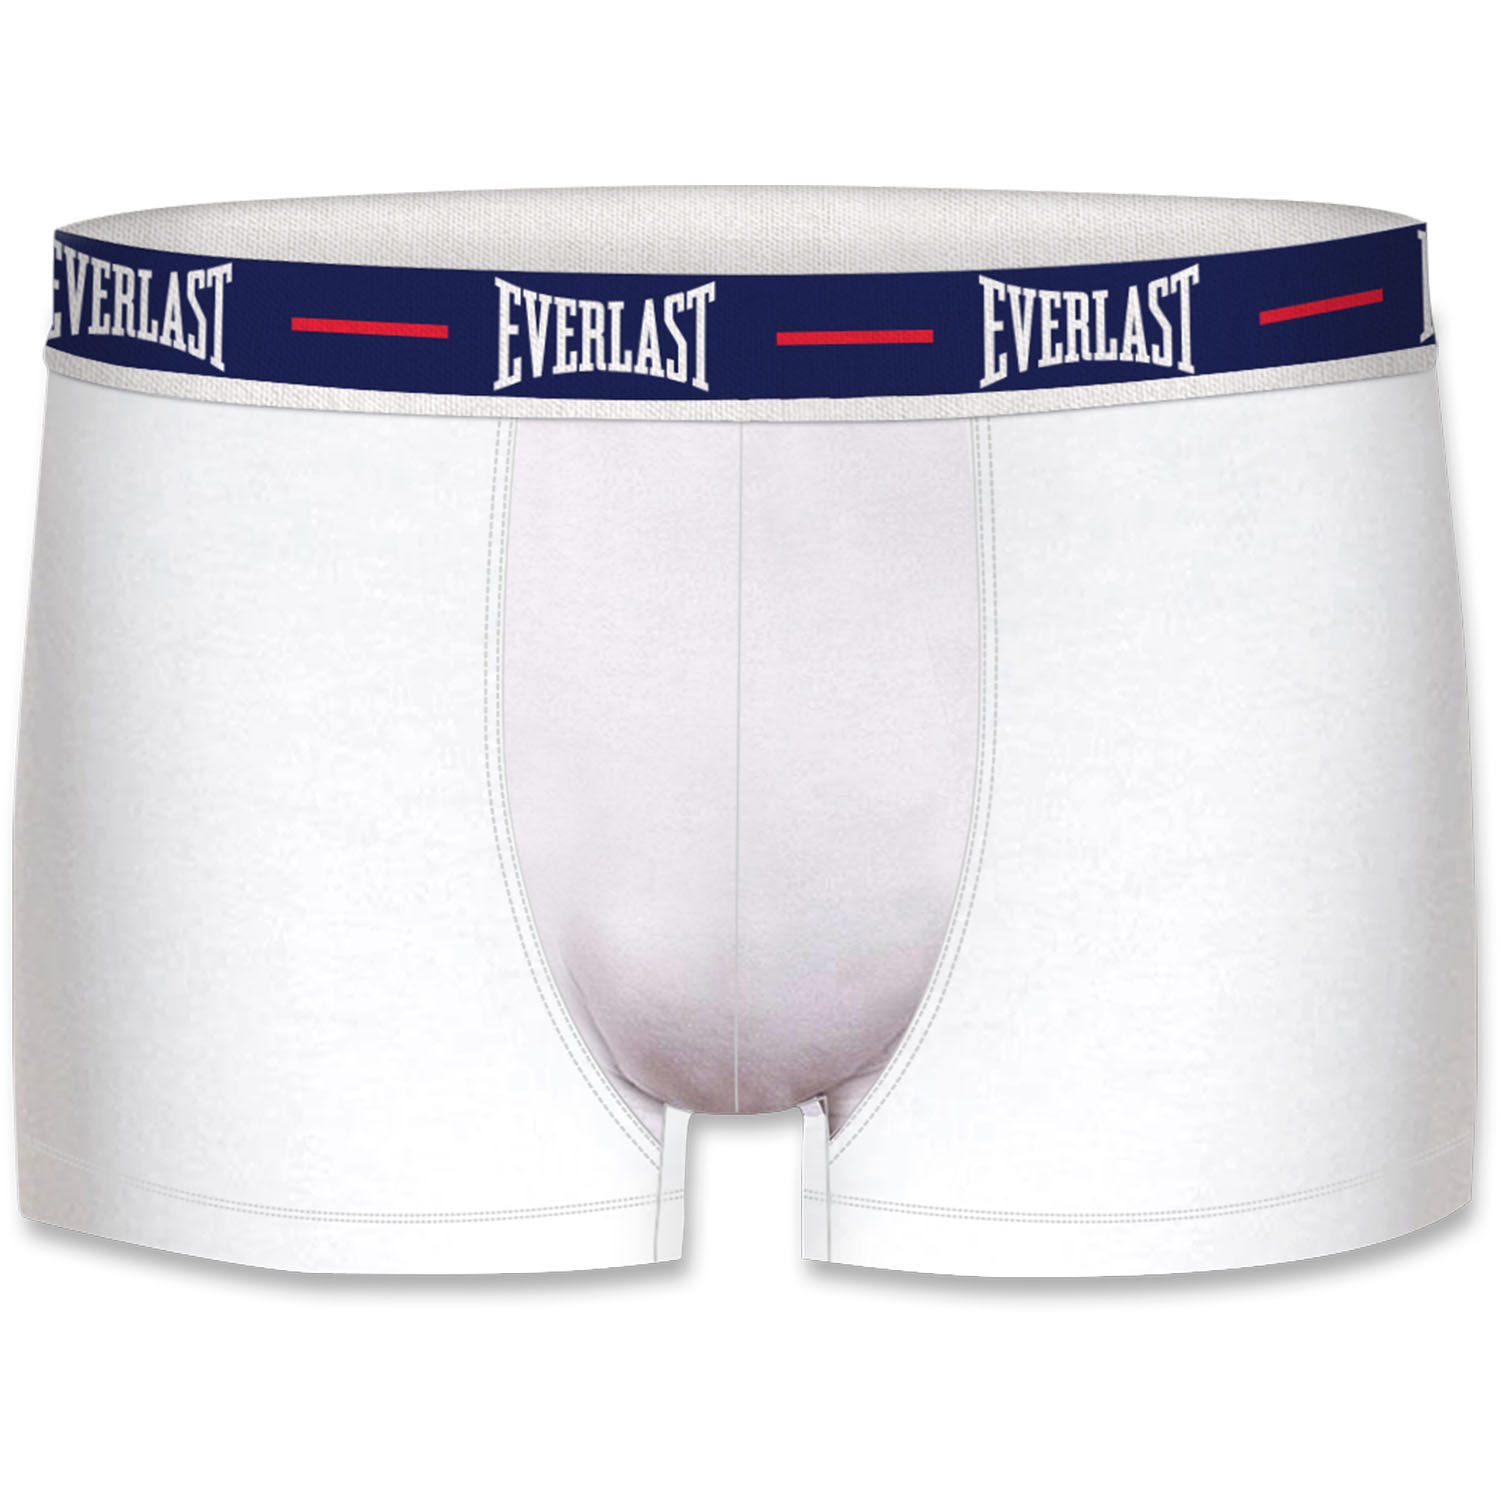 Everlast Boxershorts, AS1, white, M